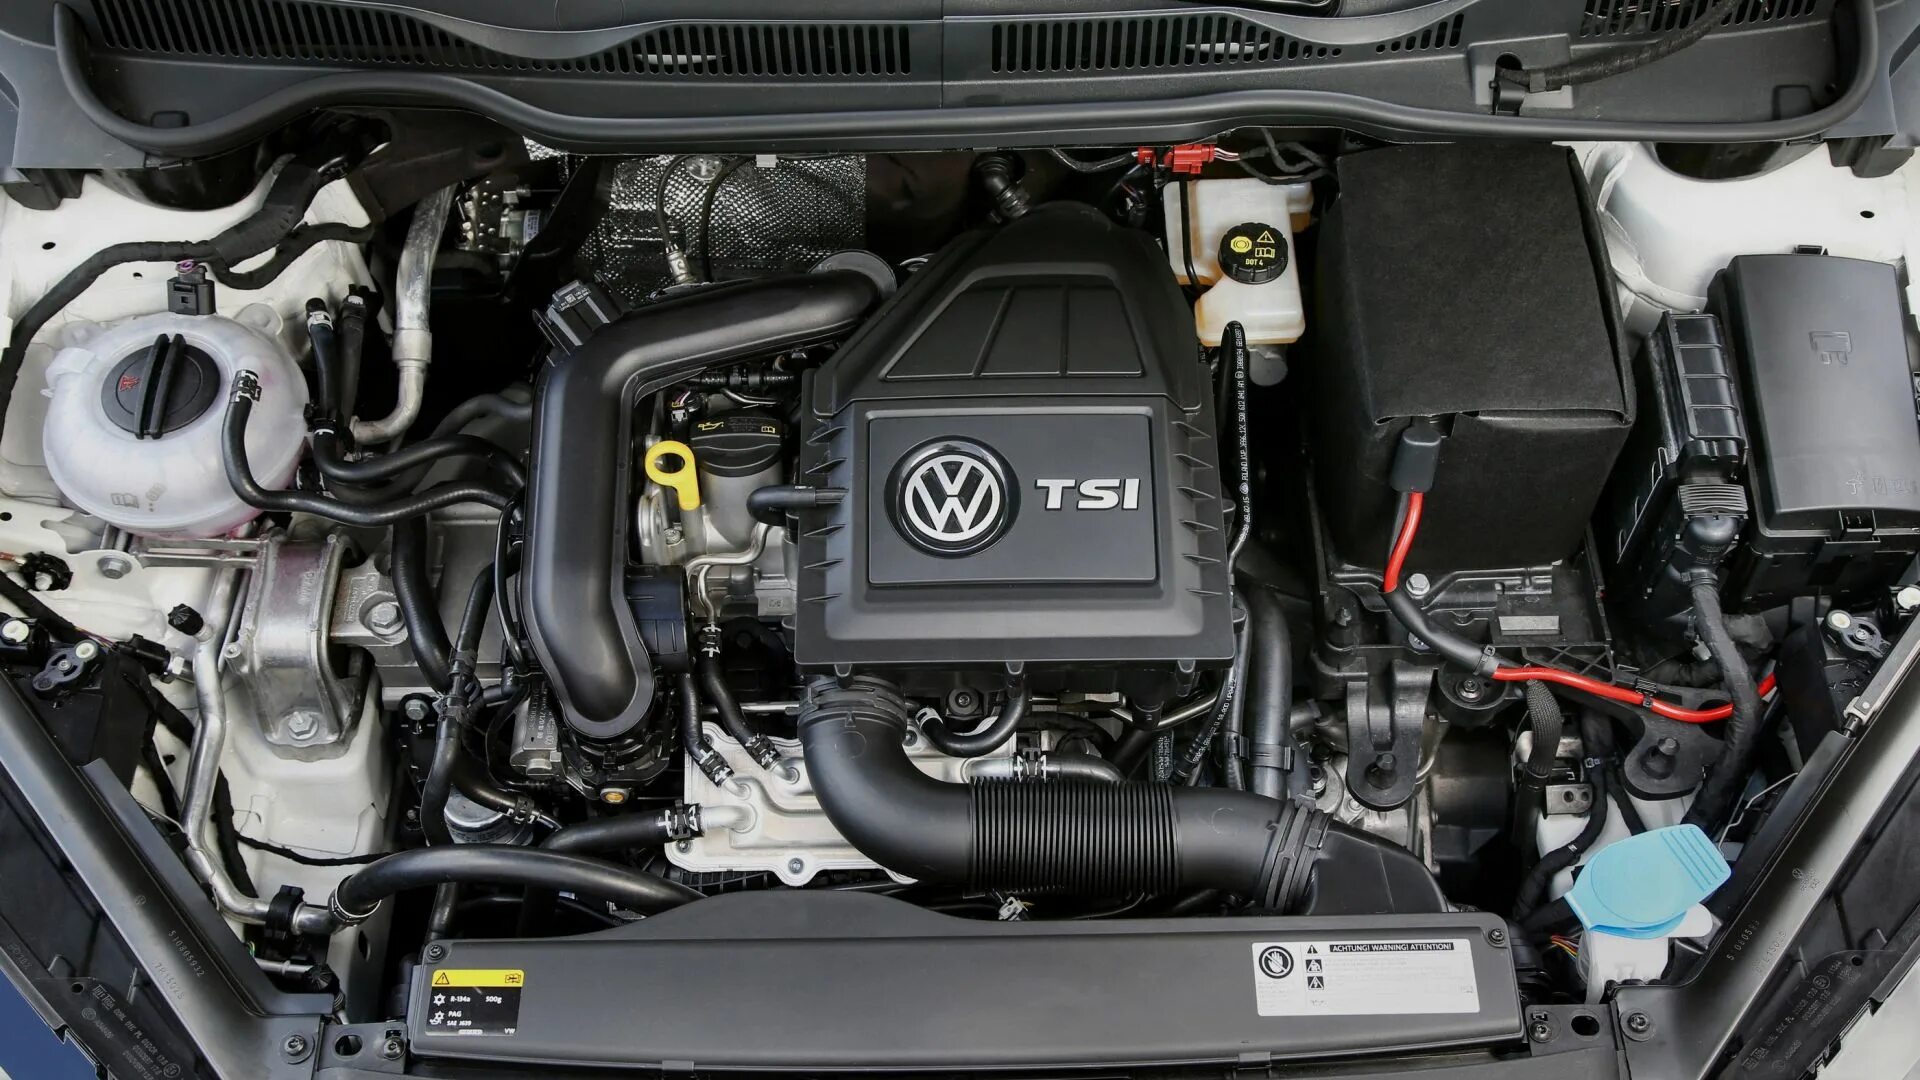 Volkswagen Golf 6 1.2 TSI. Volkswagen Golf TSI 1.2. Гольф плюс 1.2 TSI мотор. Гольф 6 мотор 1.2 TSI. Куплю двигатель дизель гольф